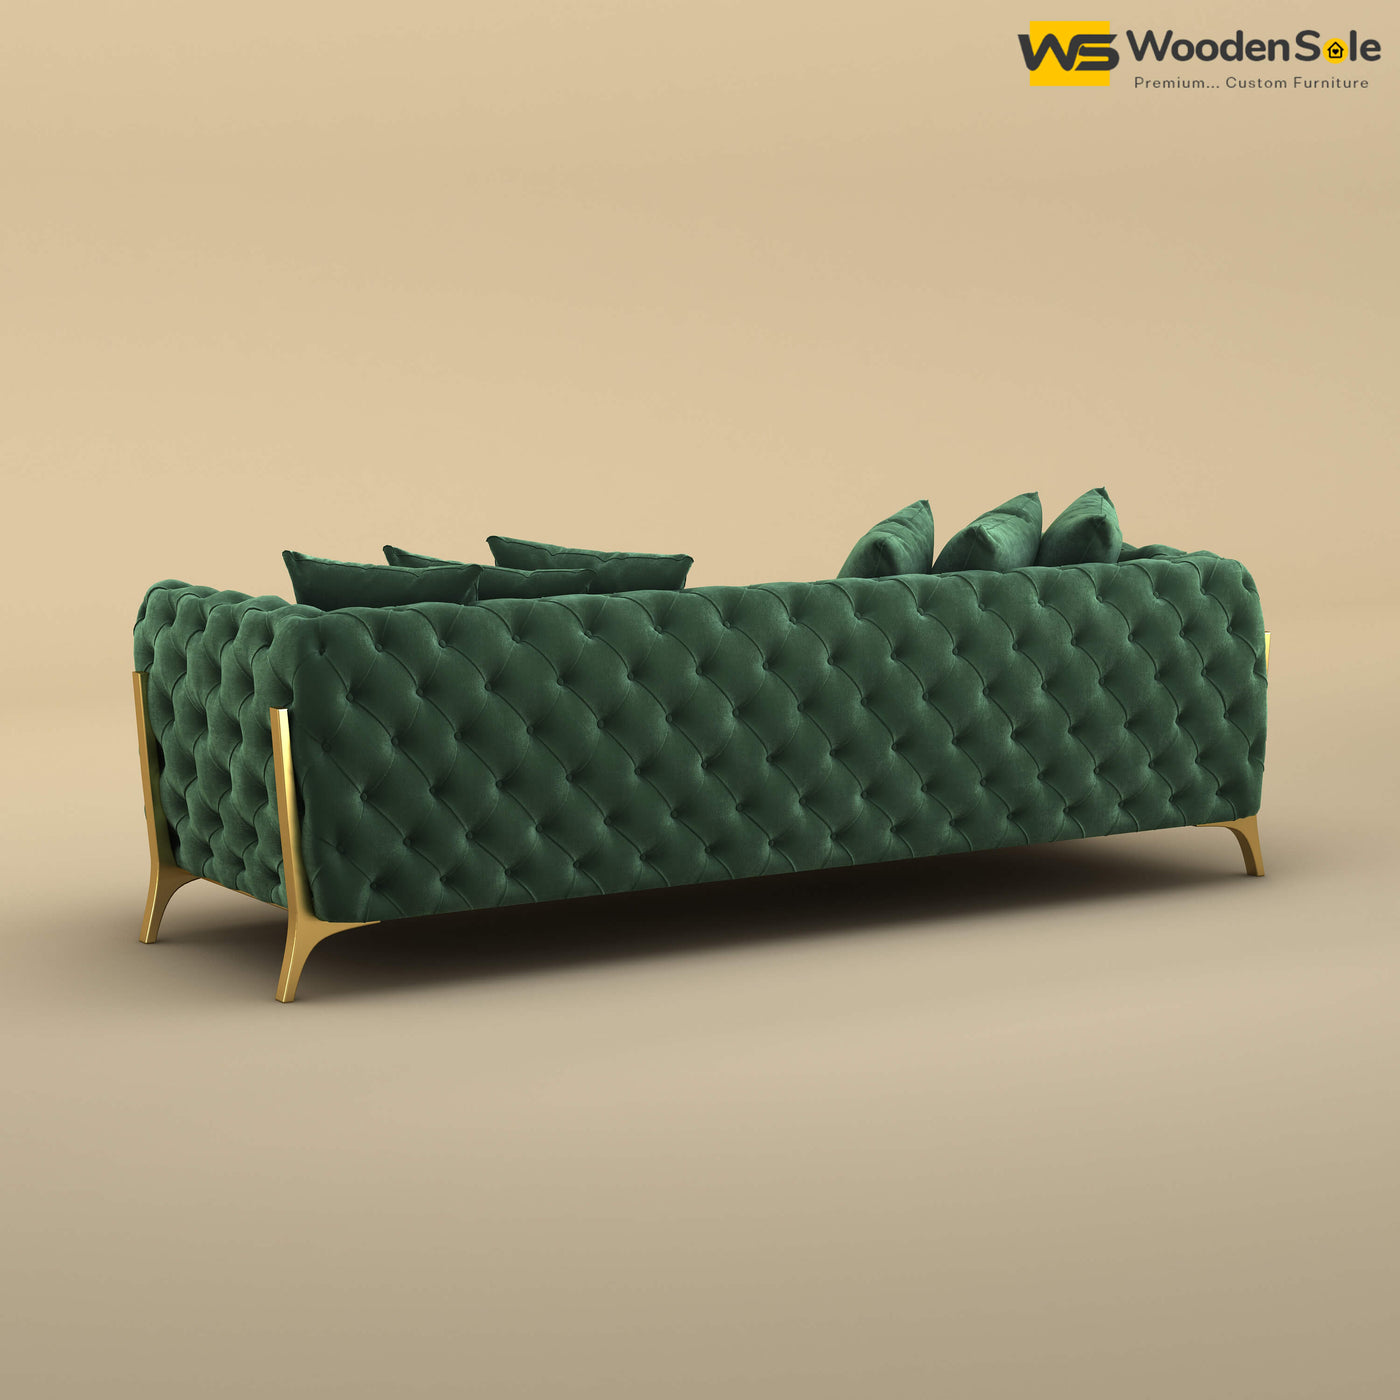 Adhira 3 Seater Premium Sofa (Velvet, Forest Green)